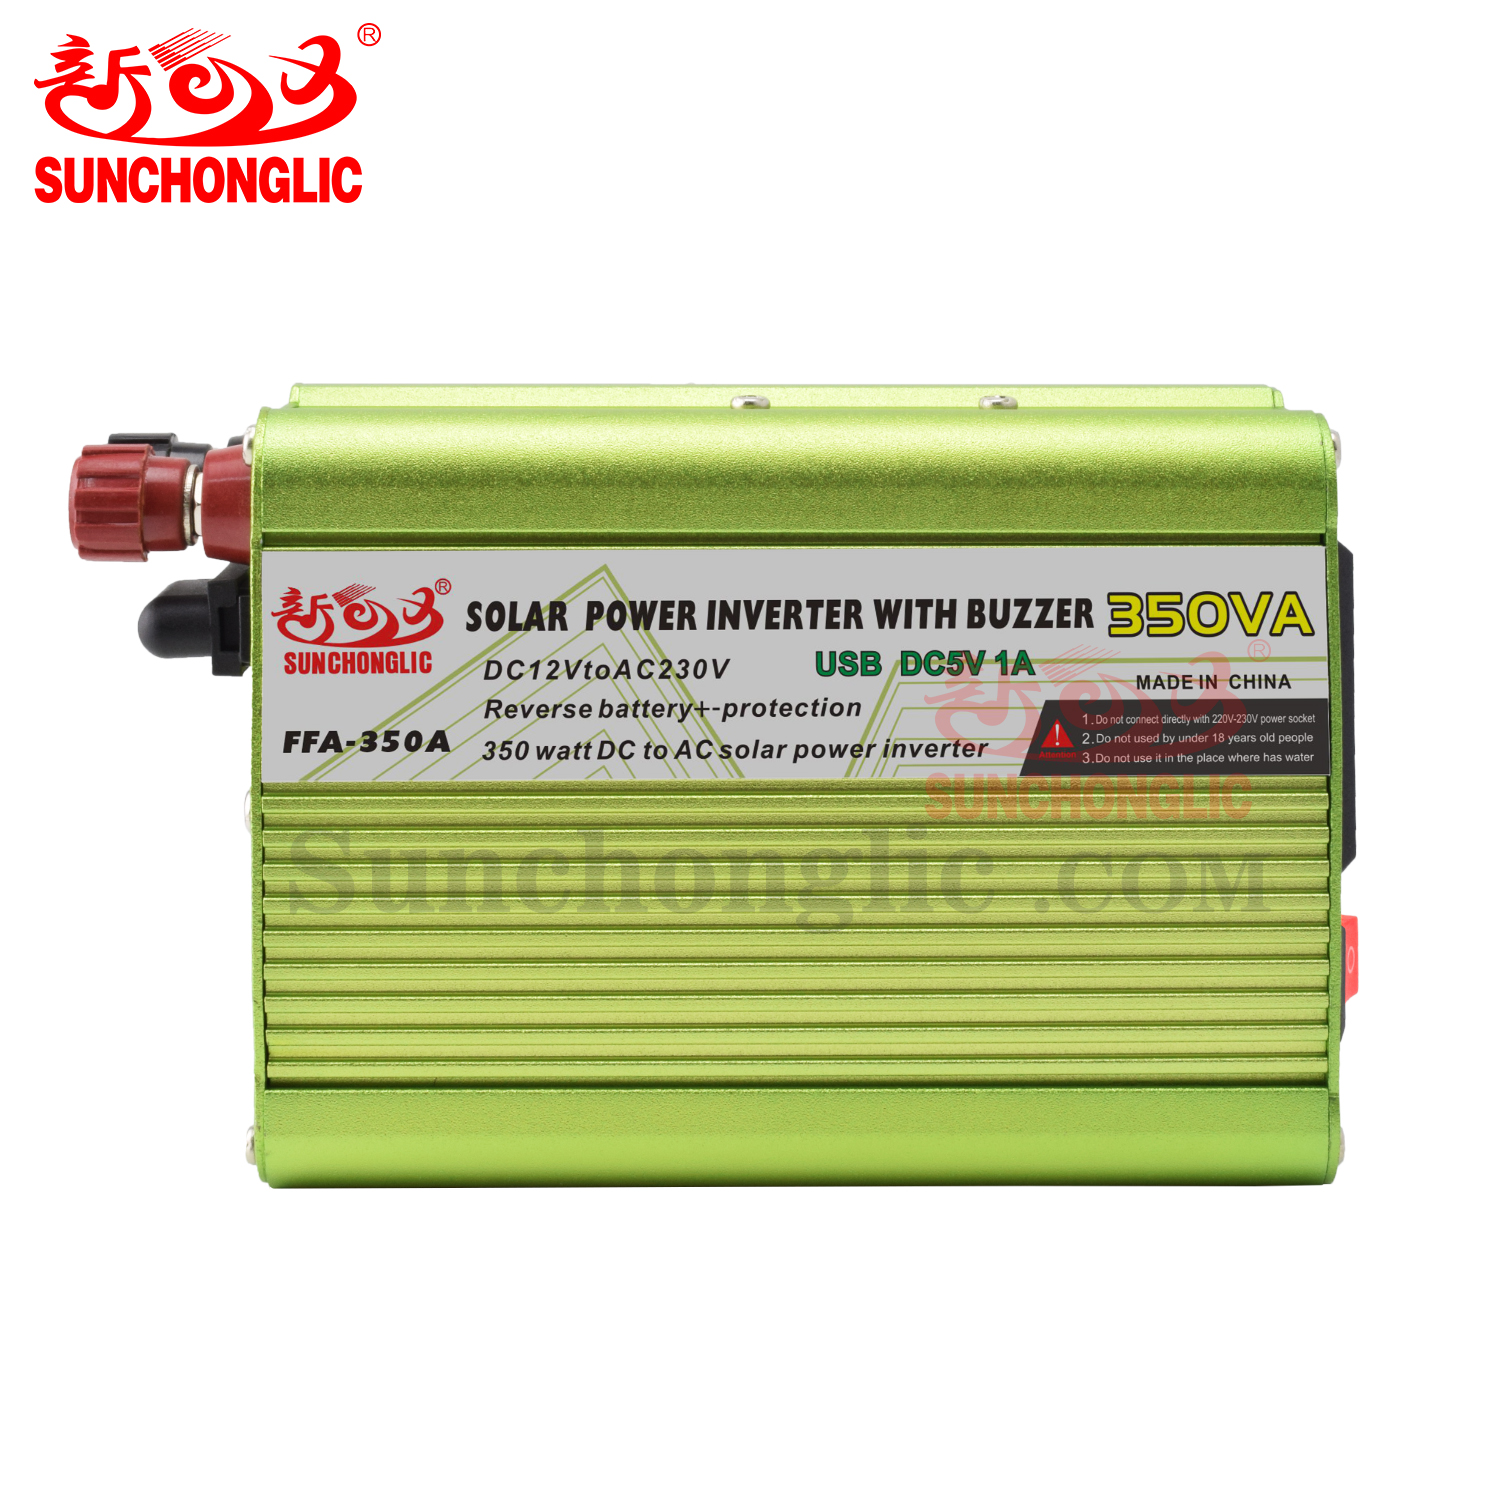 Modified Sine Wave Inverter - FFA-350A